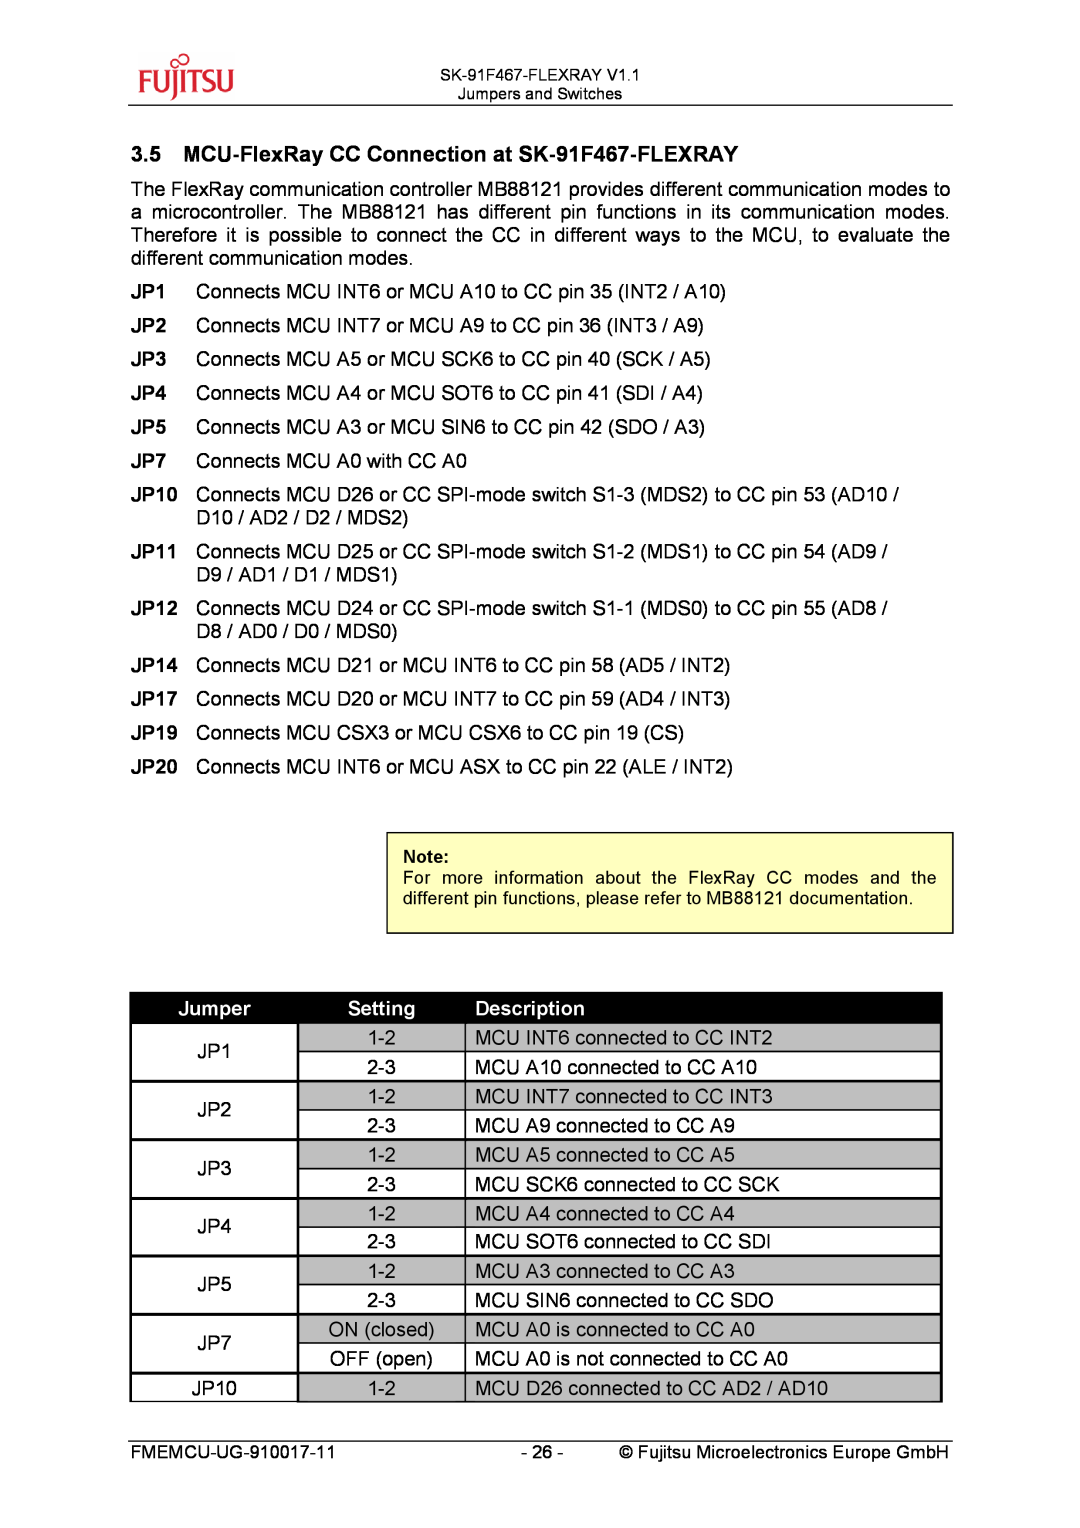 Fujitsu MB91460 SERIES, MB88121 SERIES manual MCU-FlexRay CC Connection at SK-91F467-FLEXRAY, Jumper, Setting, Description 